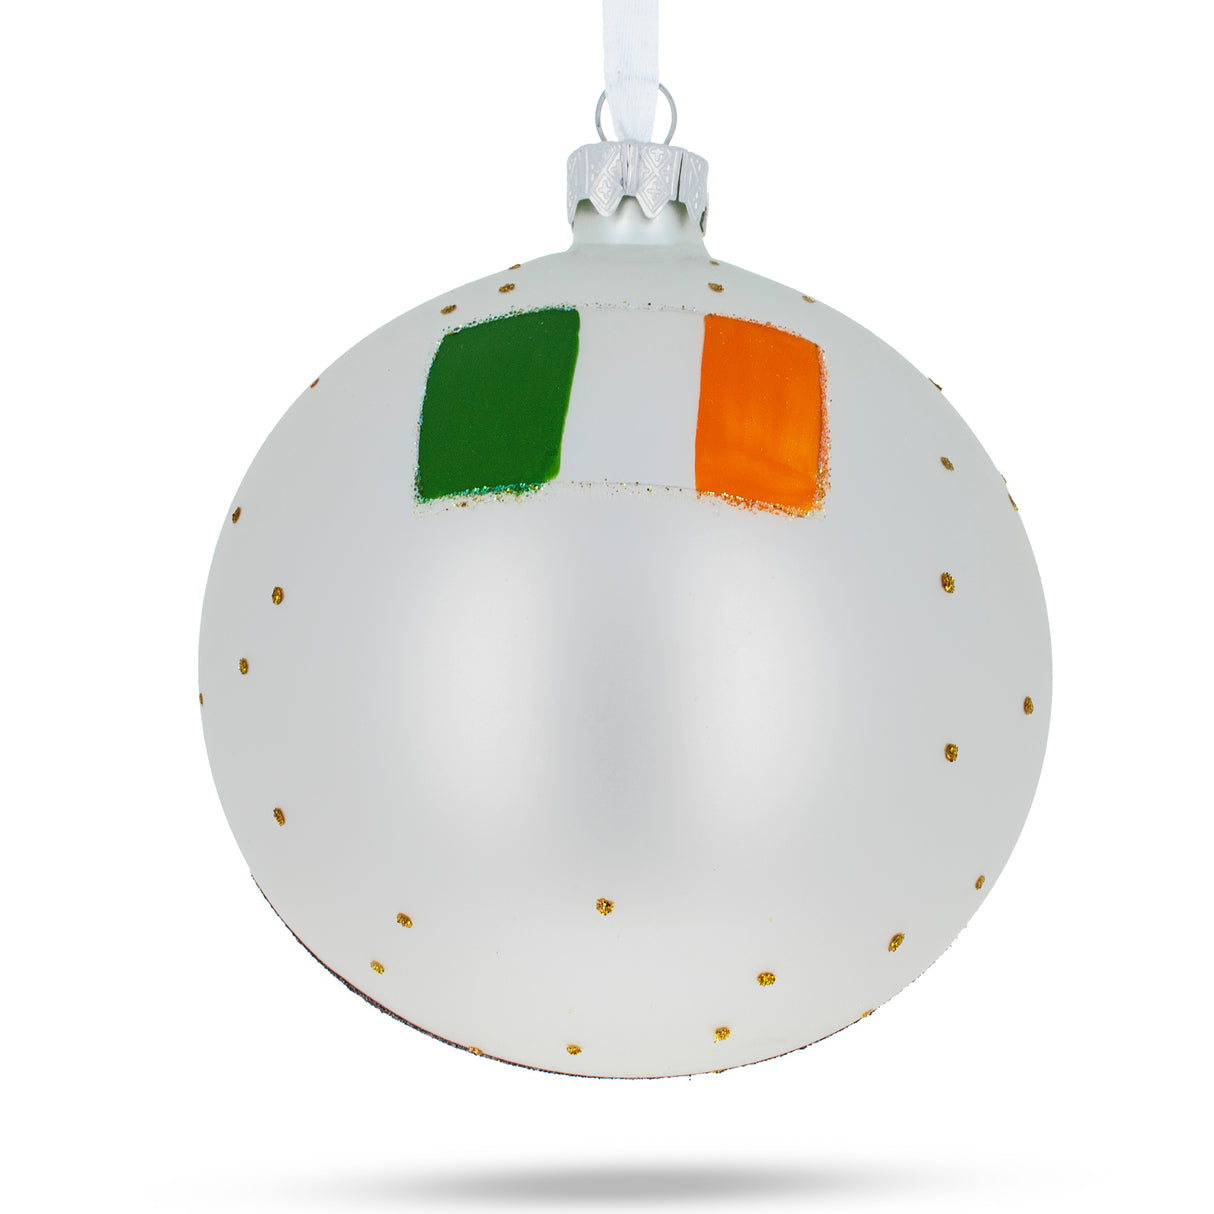 Buy Christmas Ornaments > Travel > Europe > Ireland by BestPysanky Online Gift Ship